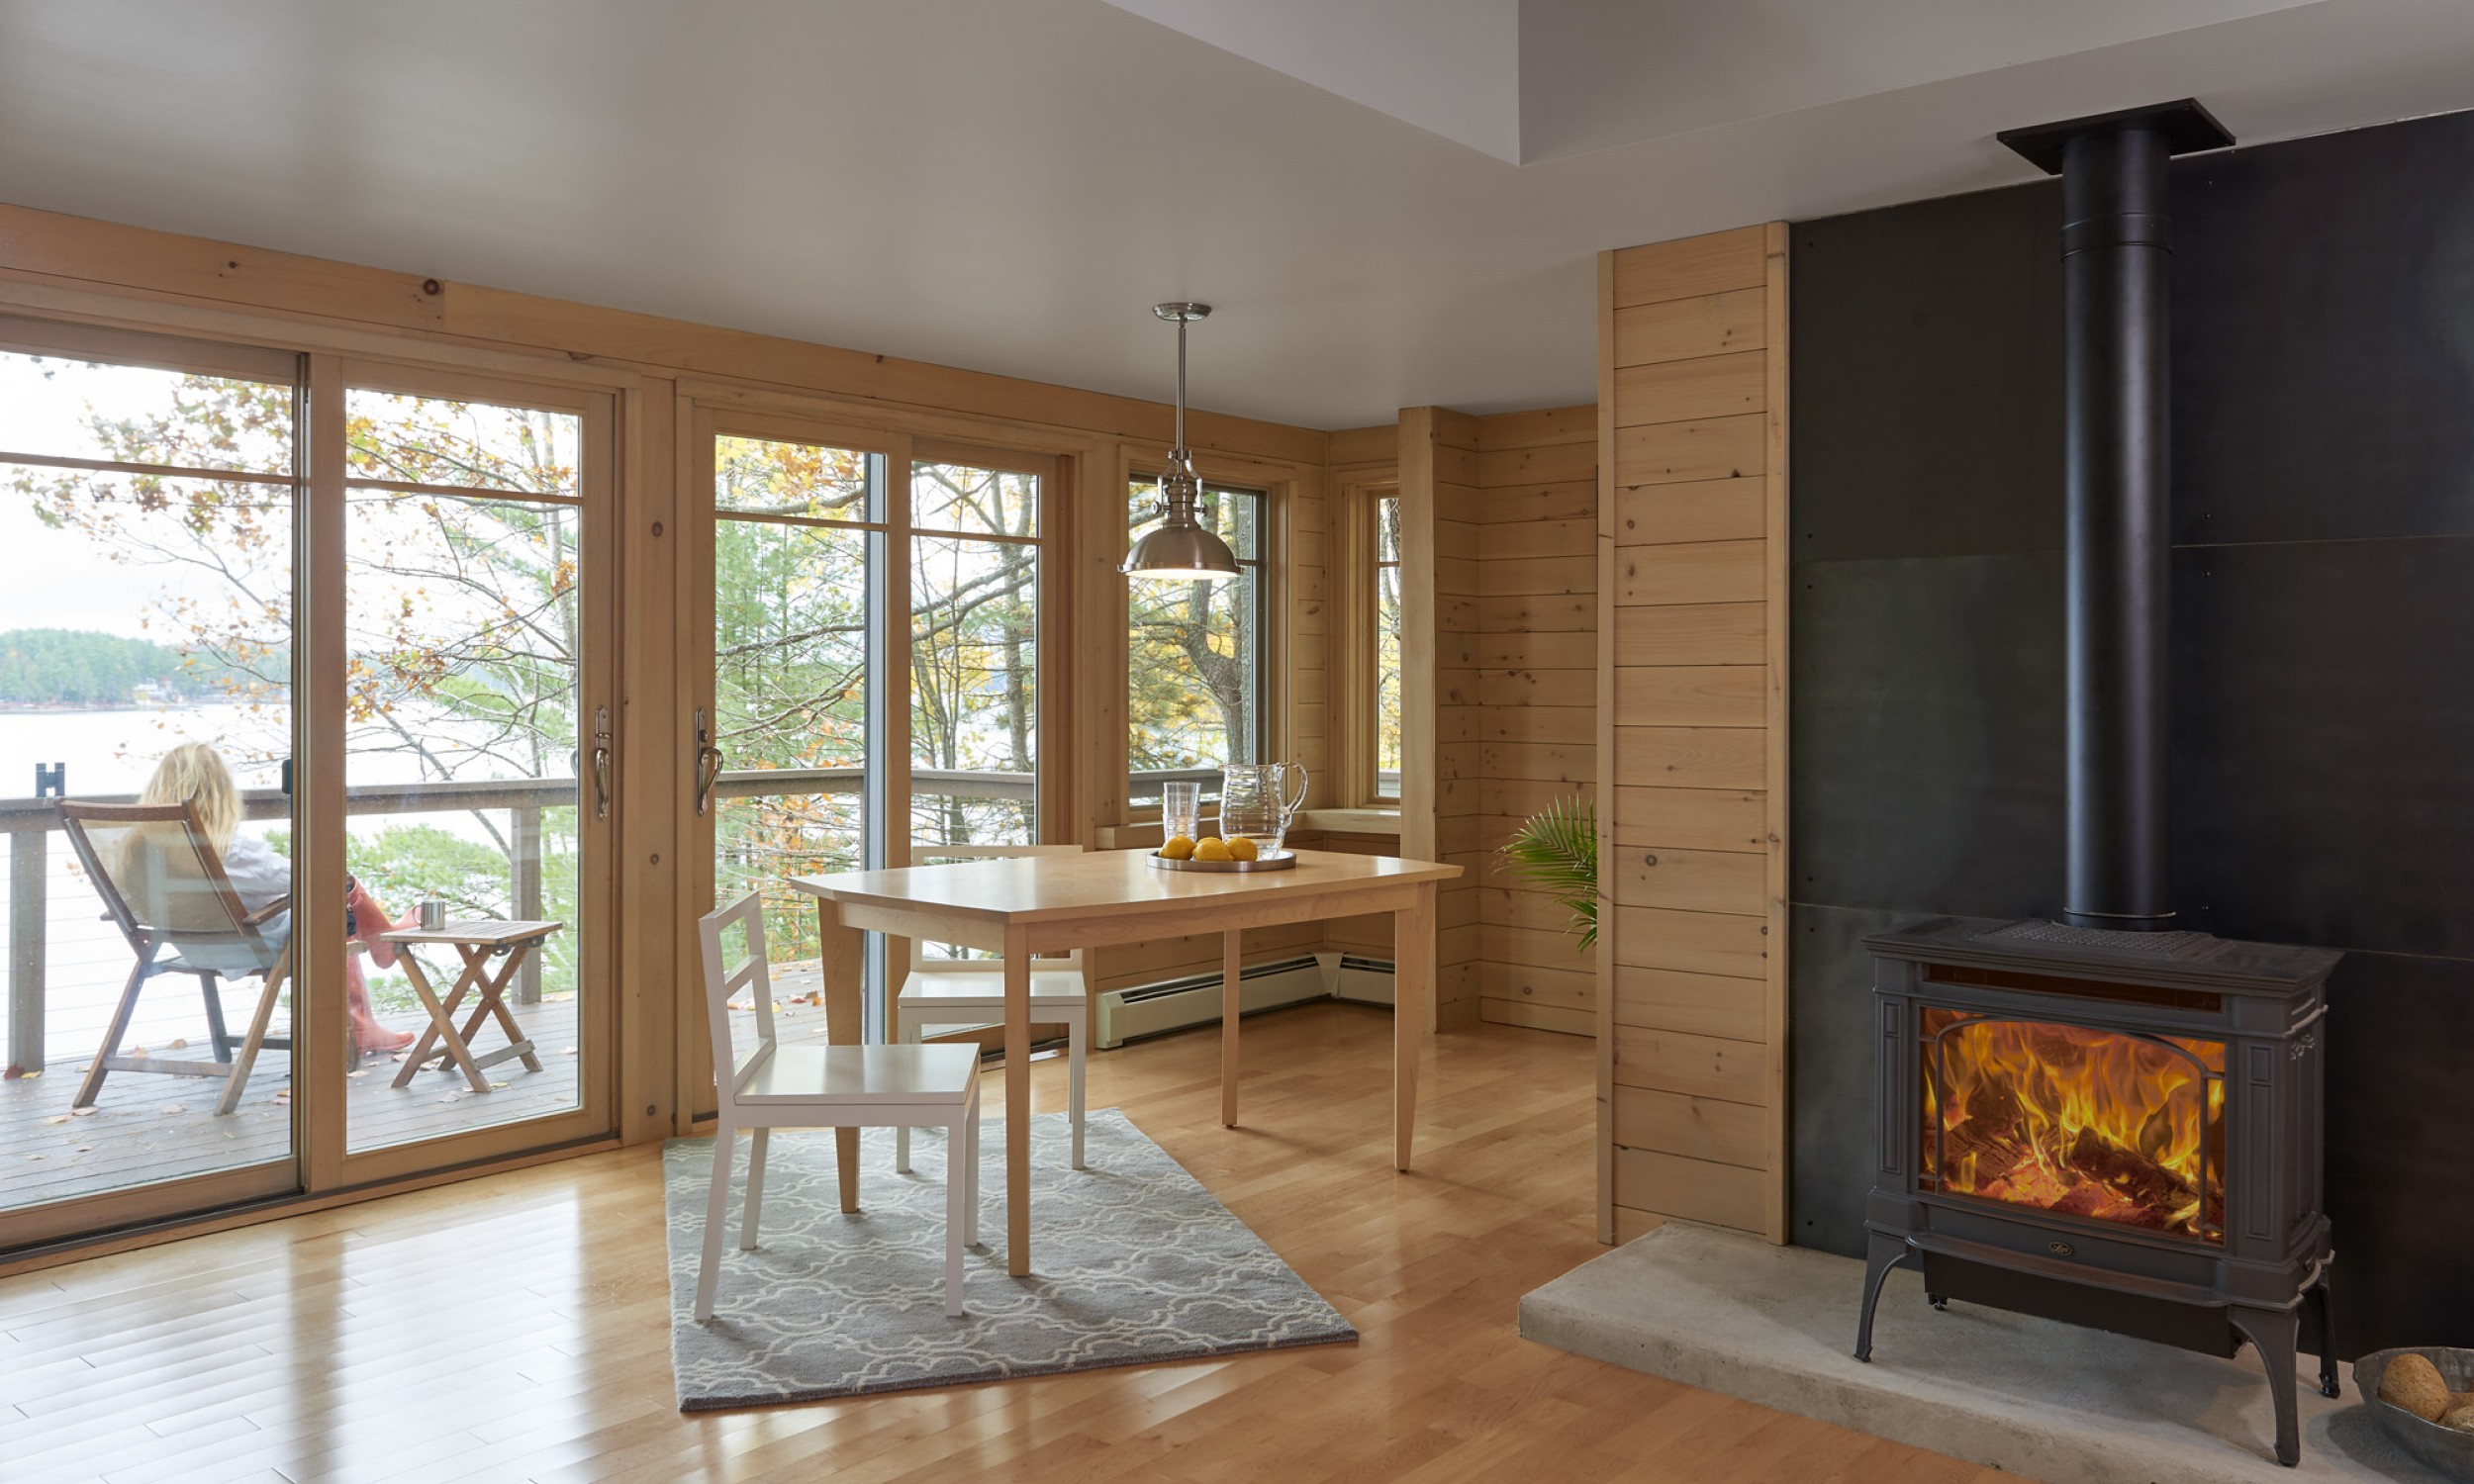 Gas stove, maple flooring, lake view, Maine Architect, Concrete hearth